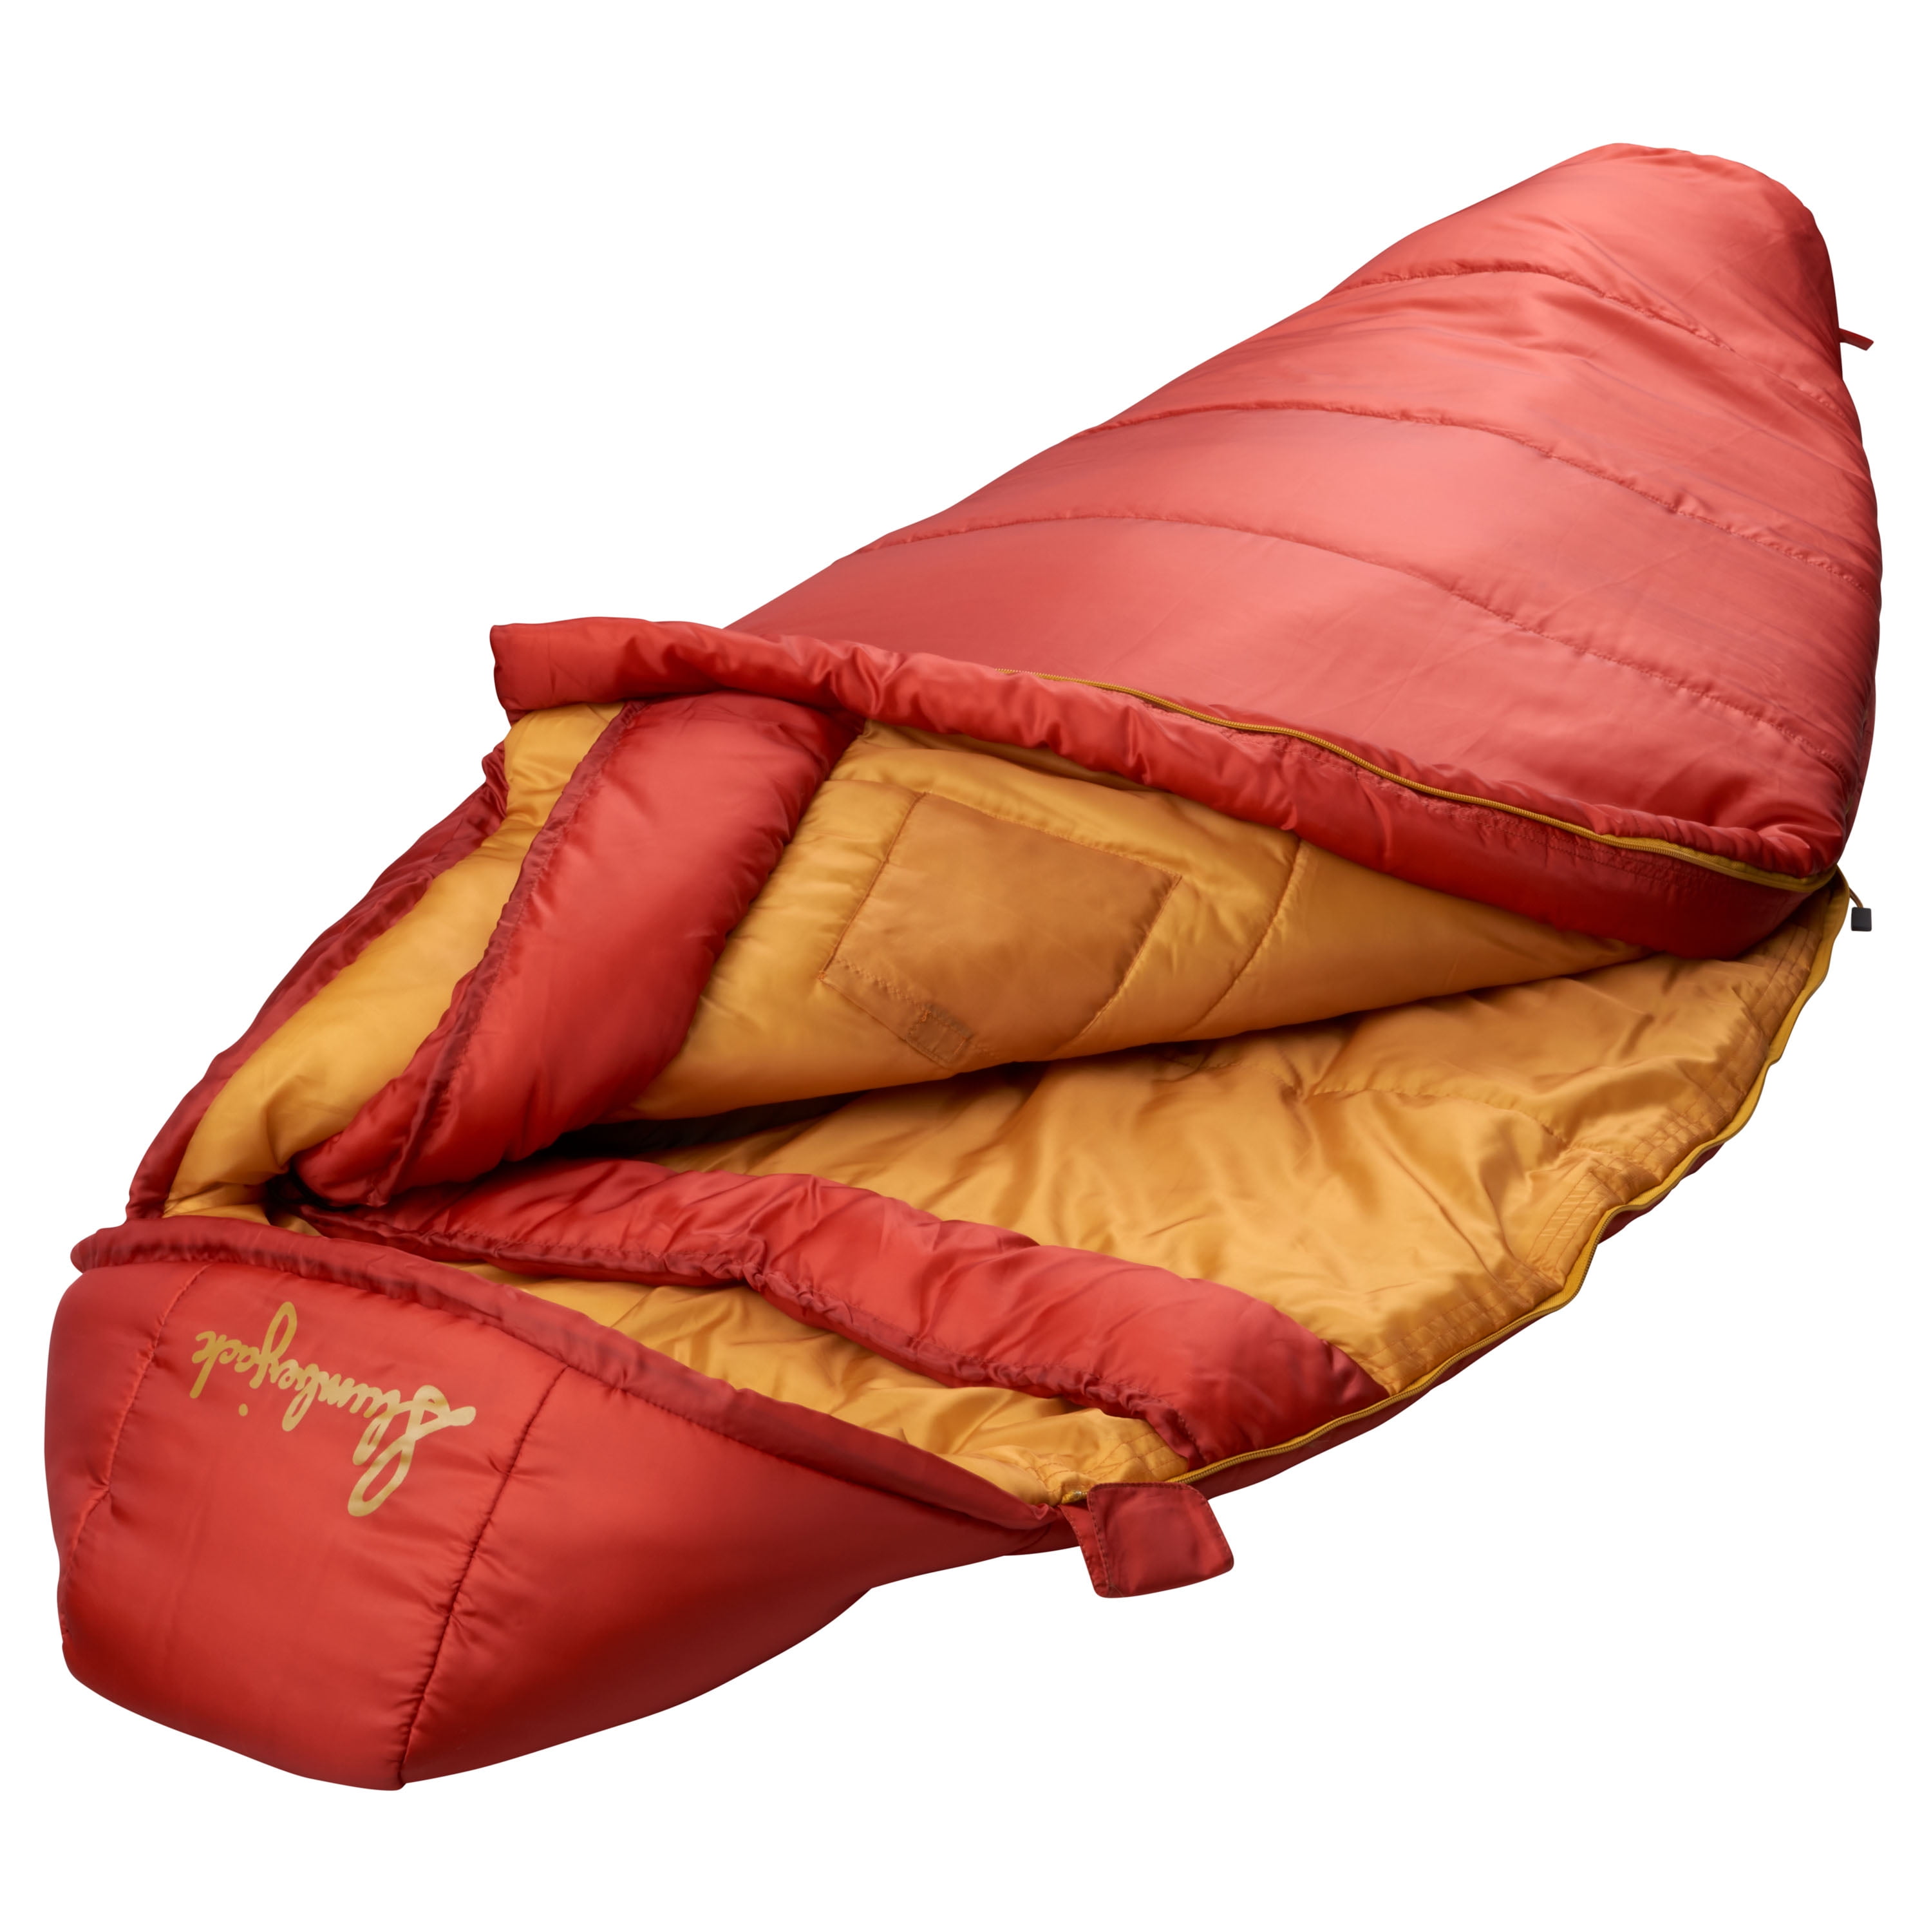 Big Timber Pro 20 Sleeping Bag by Slumberjack at Fleet Farm